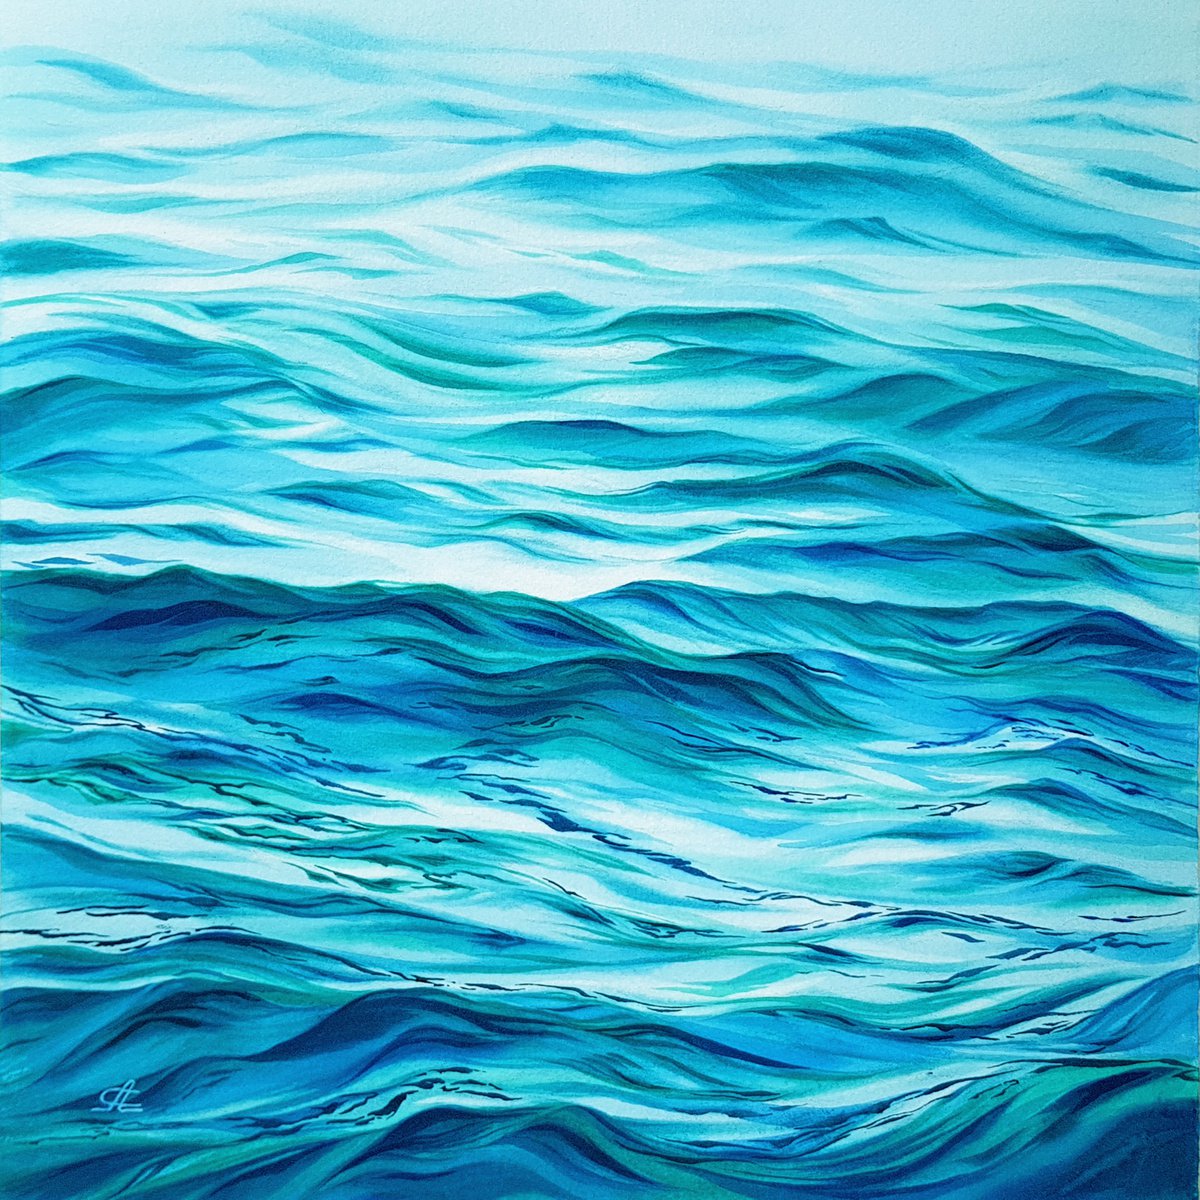 Seascape and ocean waves by Svetlana Lileeva